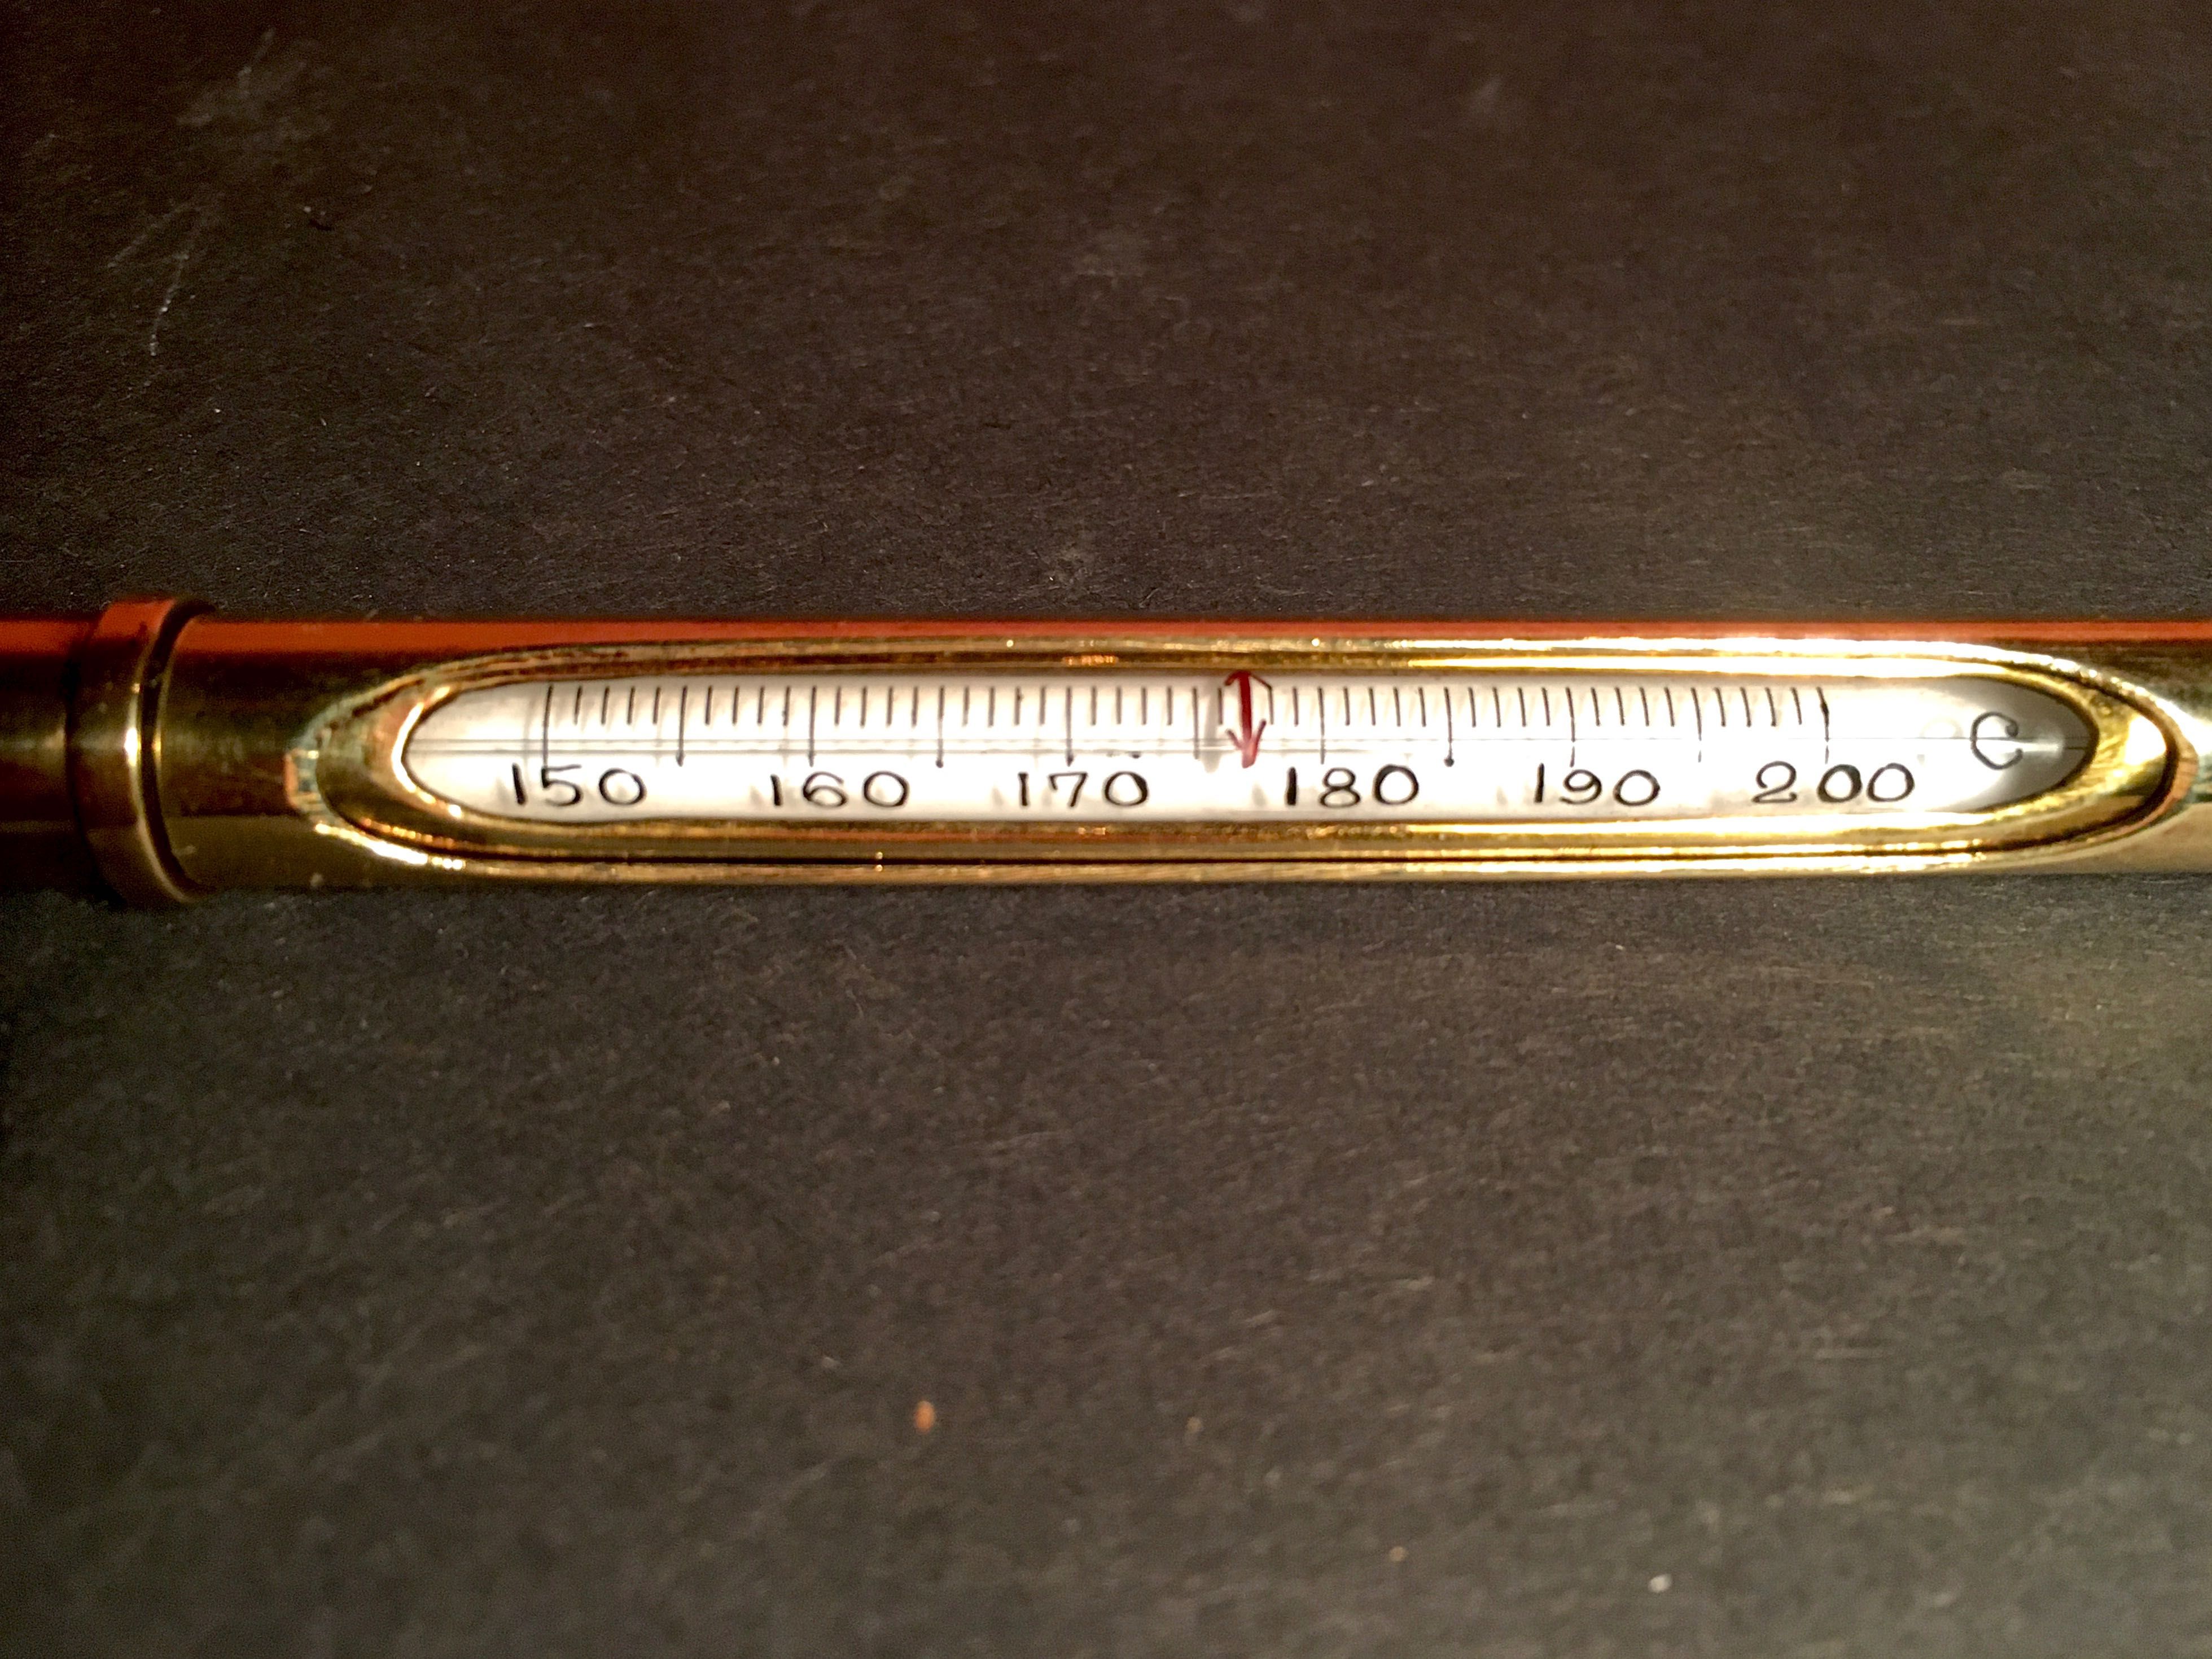 SPARMEX MEXPHALTE - termómetro antigo - escala de 150 a 200 C